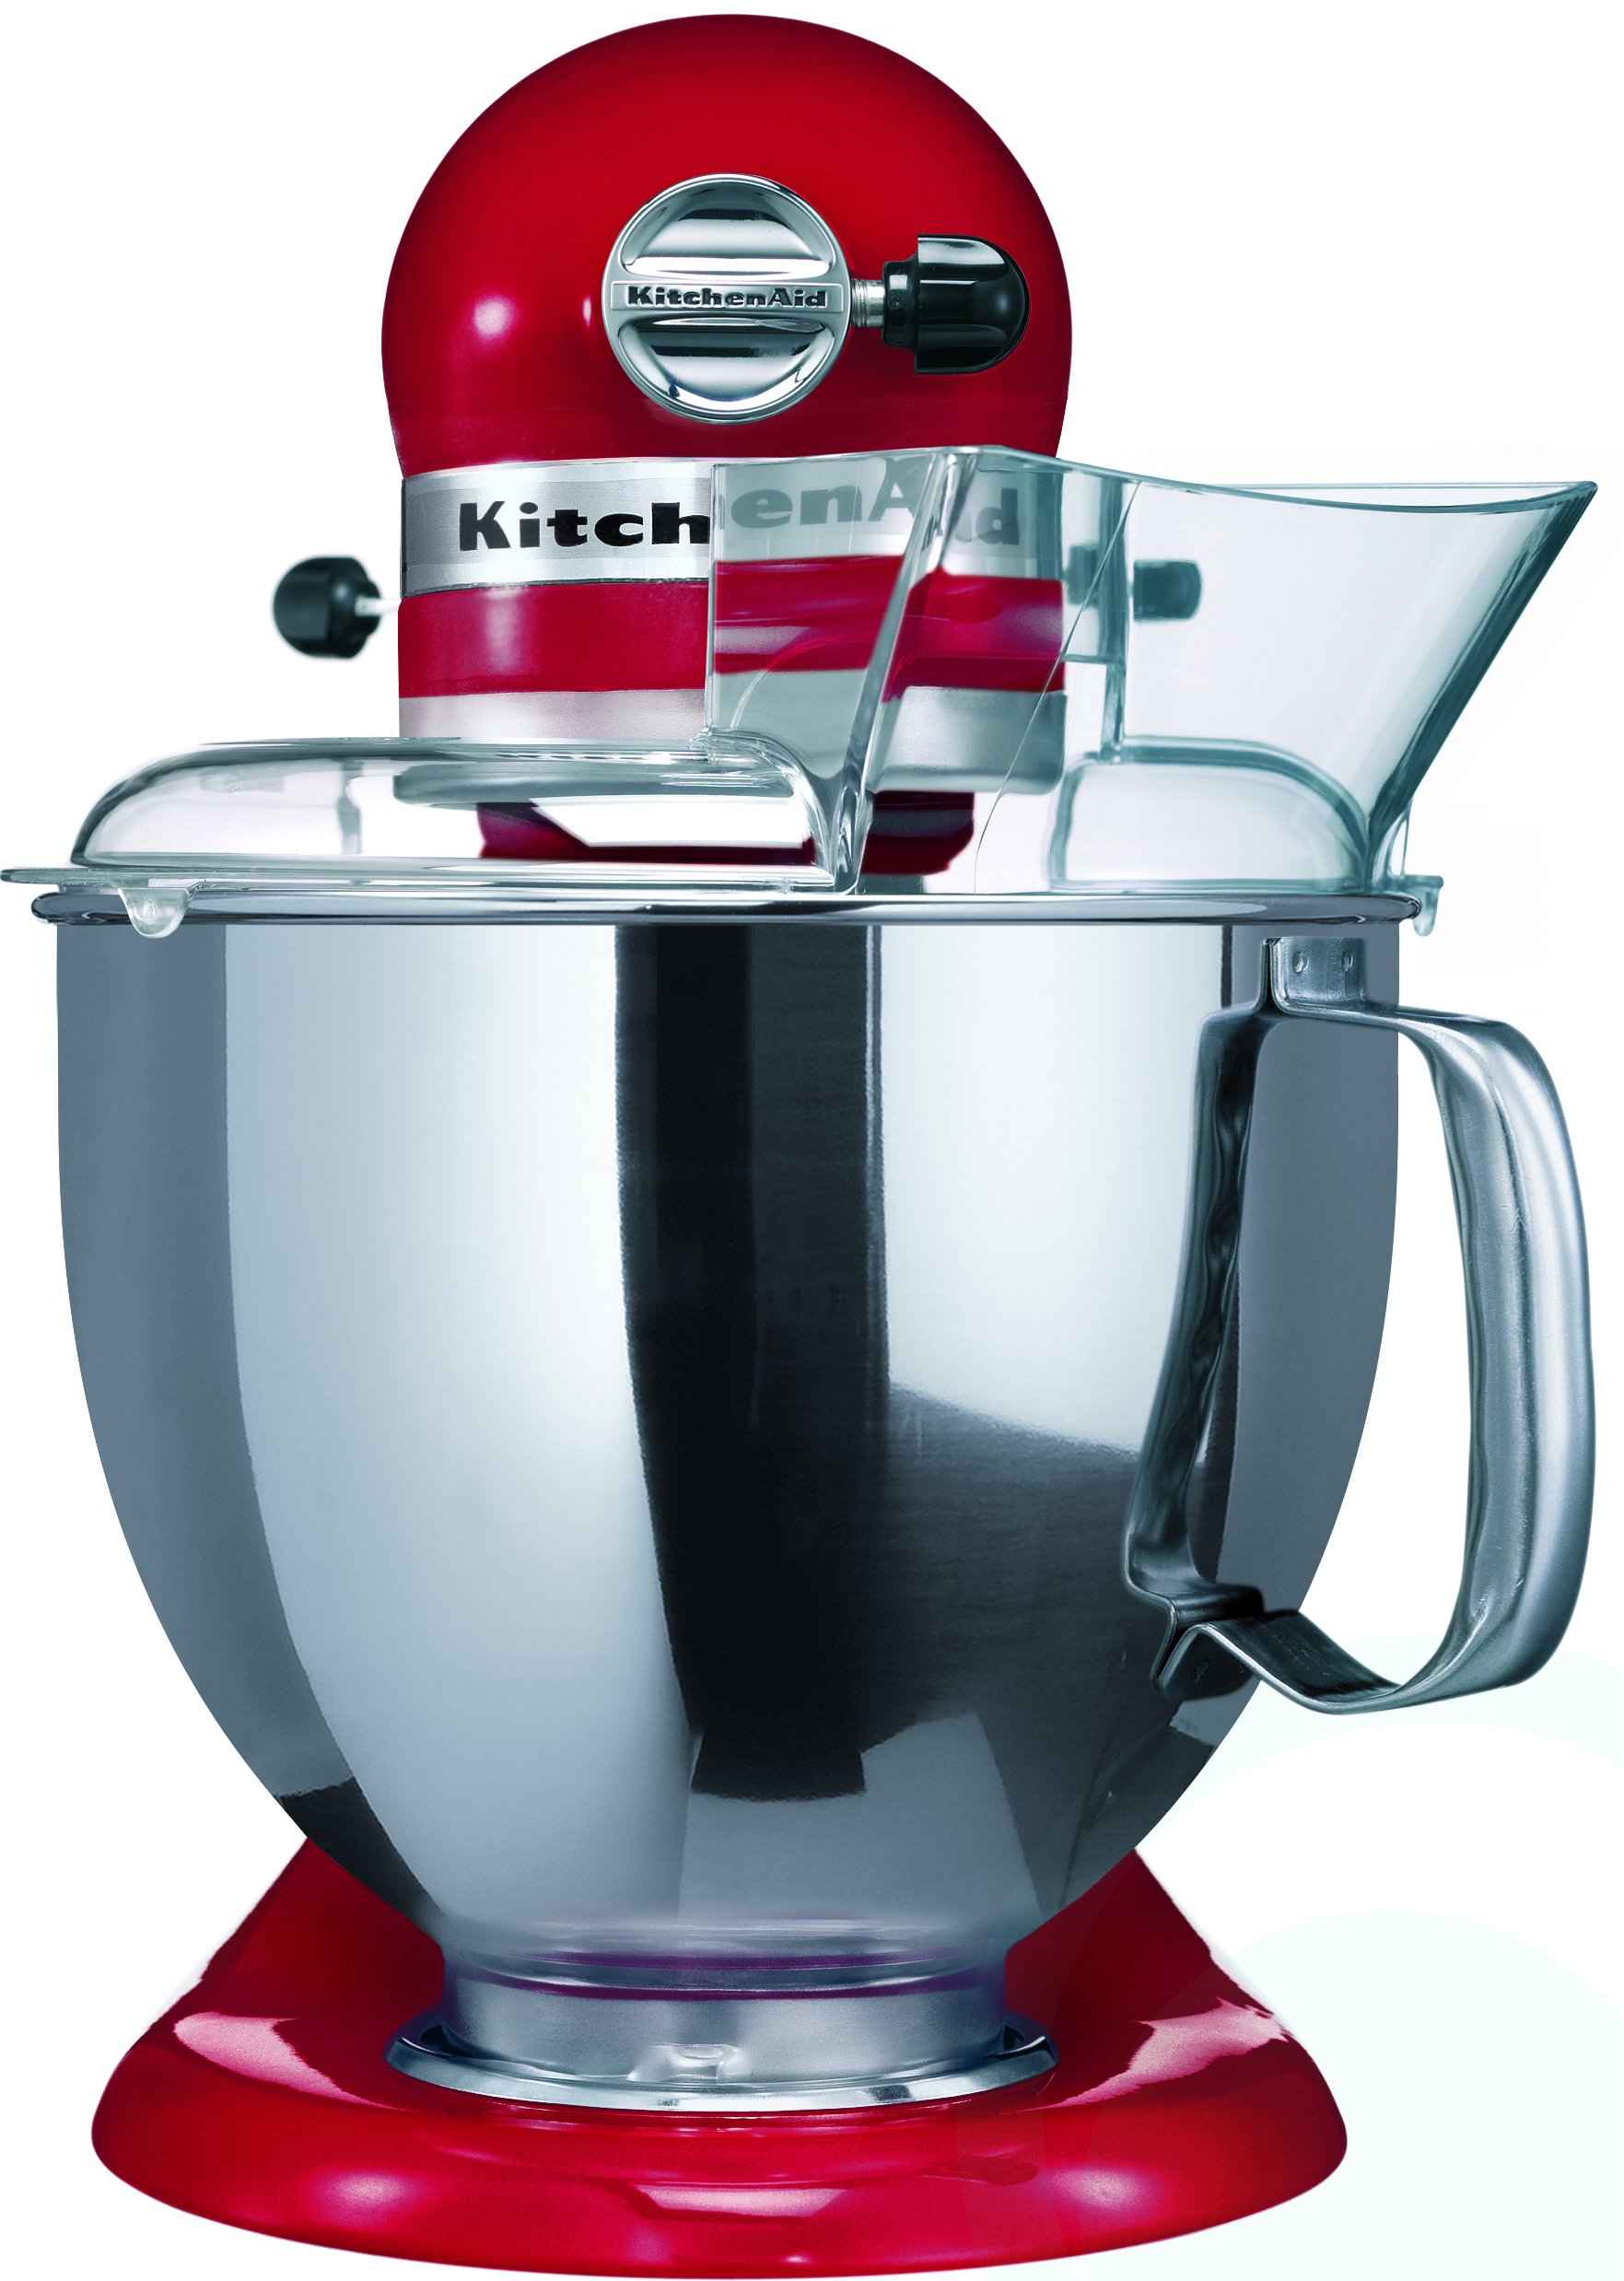 KitchenAid 91010 Artisan KSM150 Stand Mixer Appliances Online